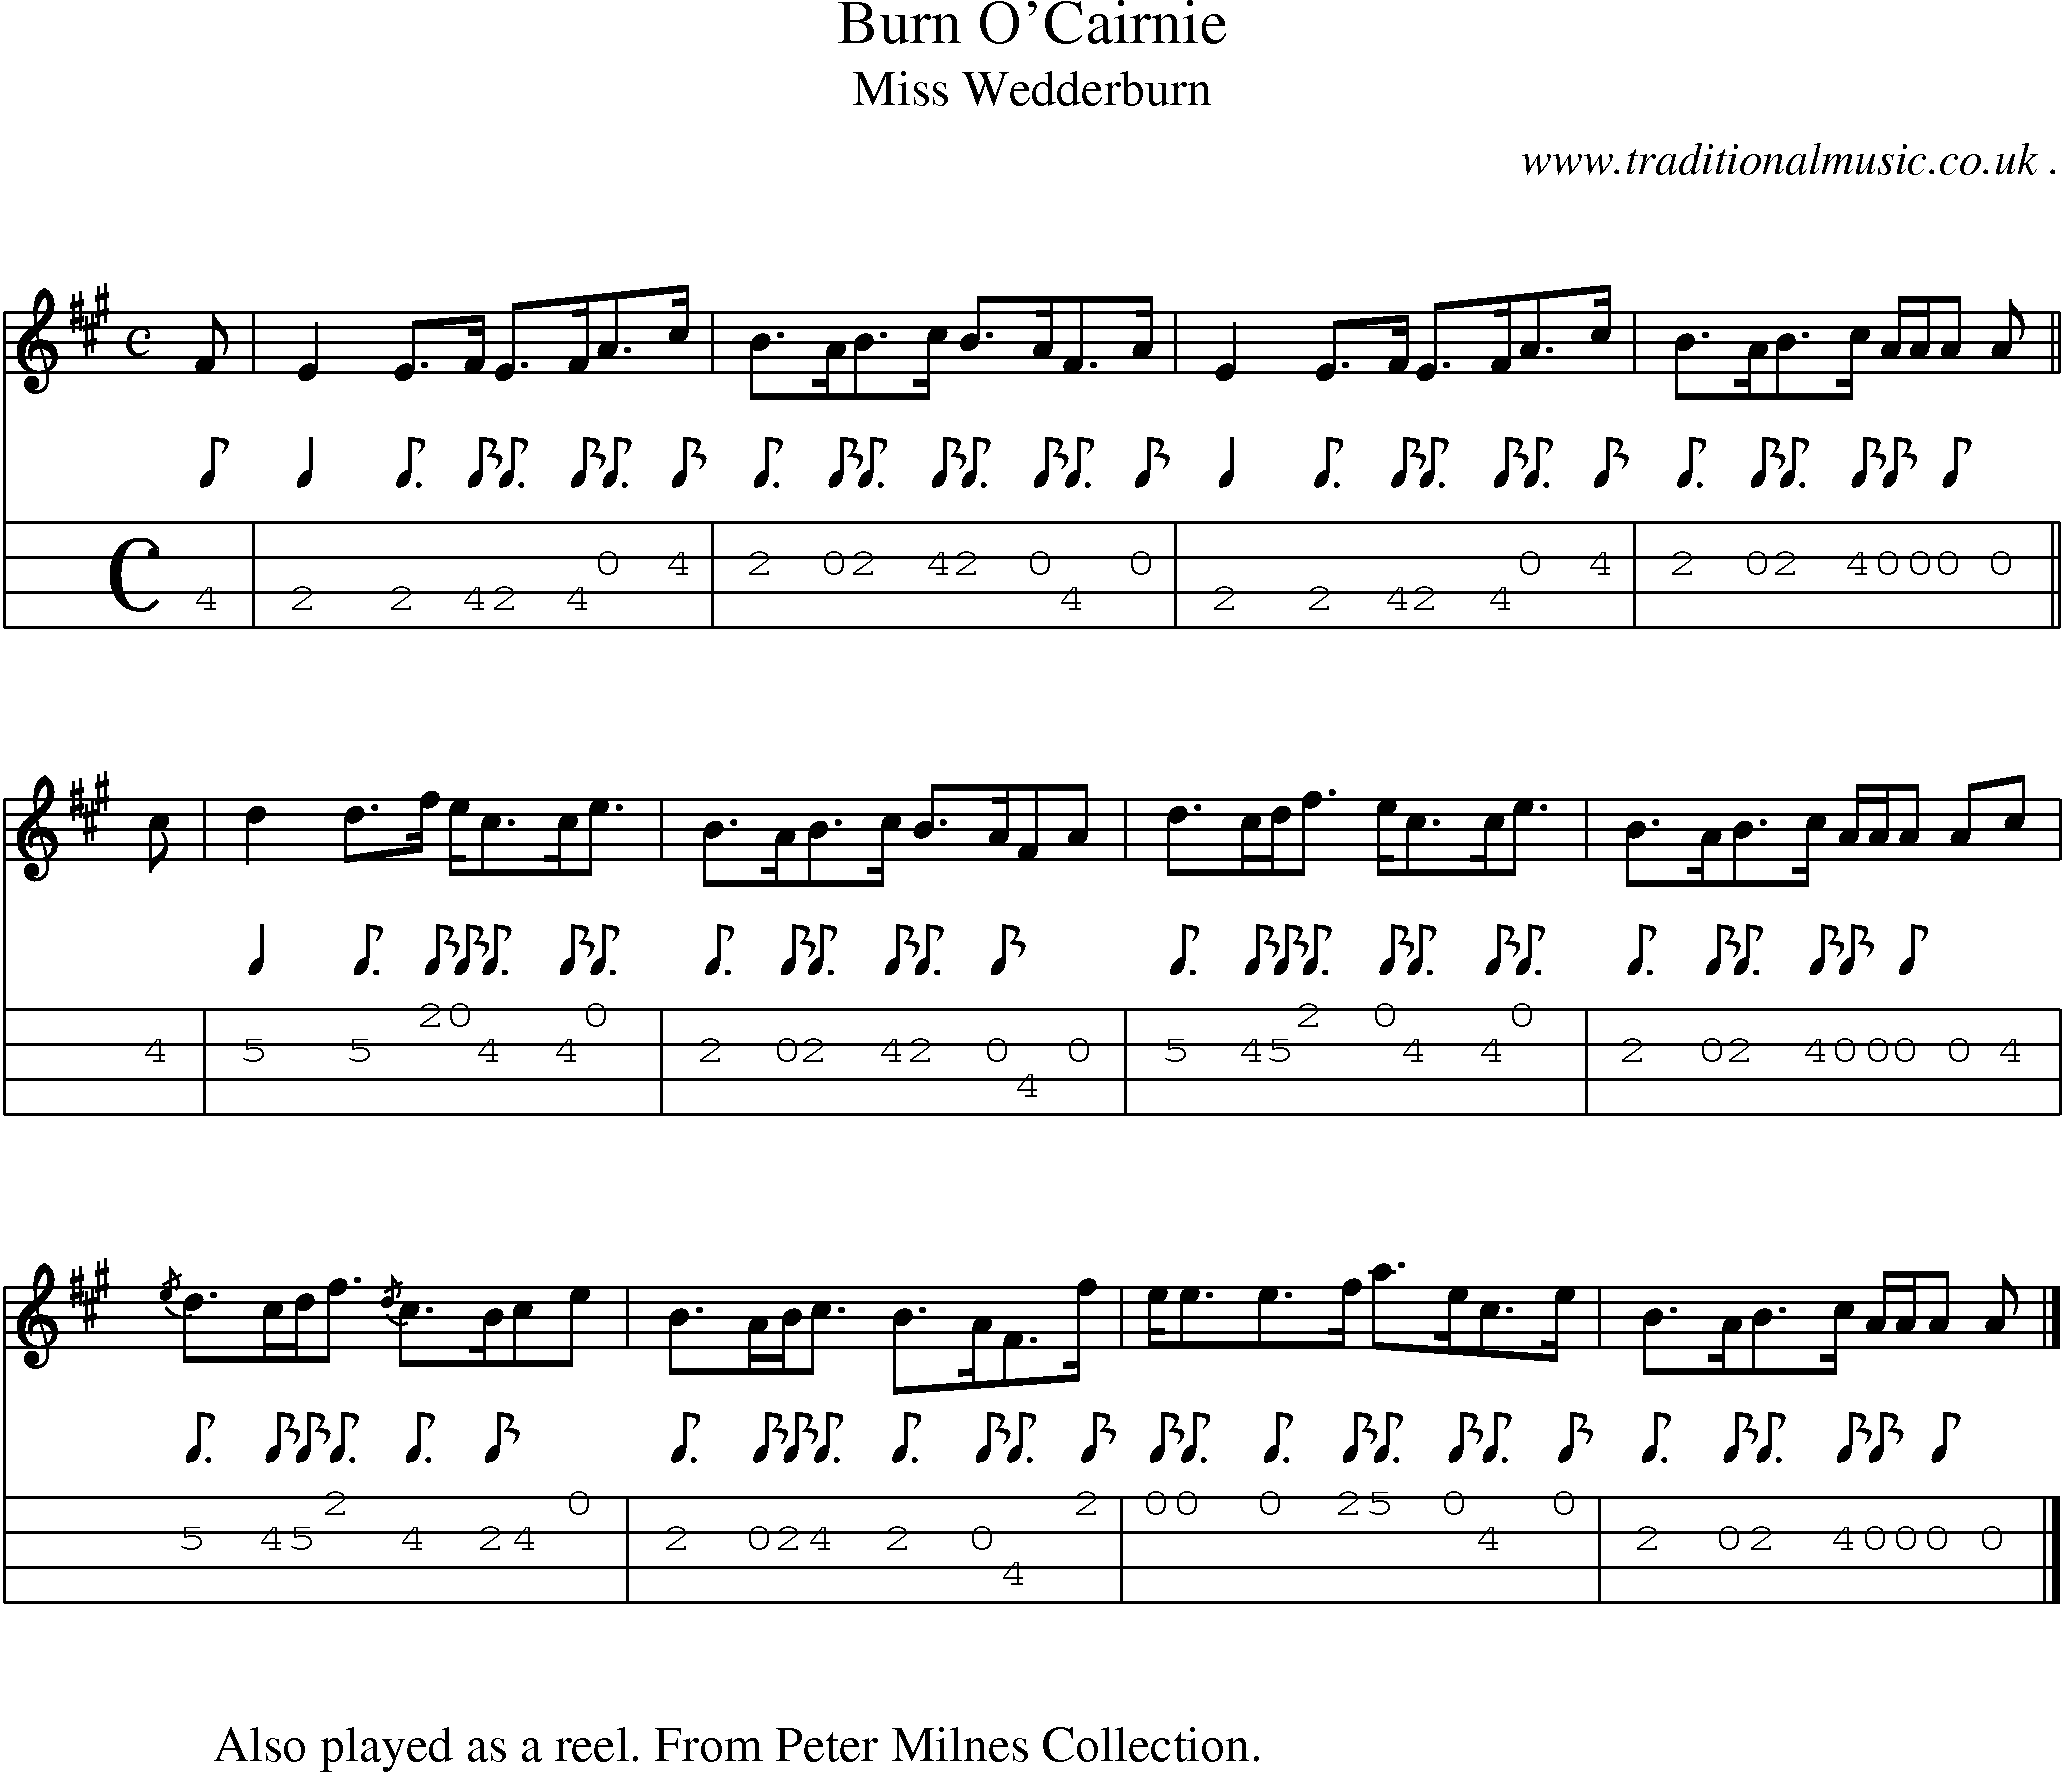 Sheet-music  score, Chords and Mandolin Tabs for Burn Ocairnie